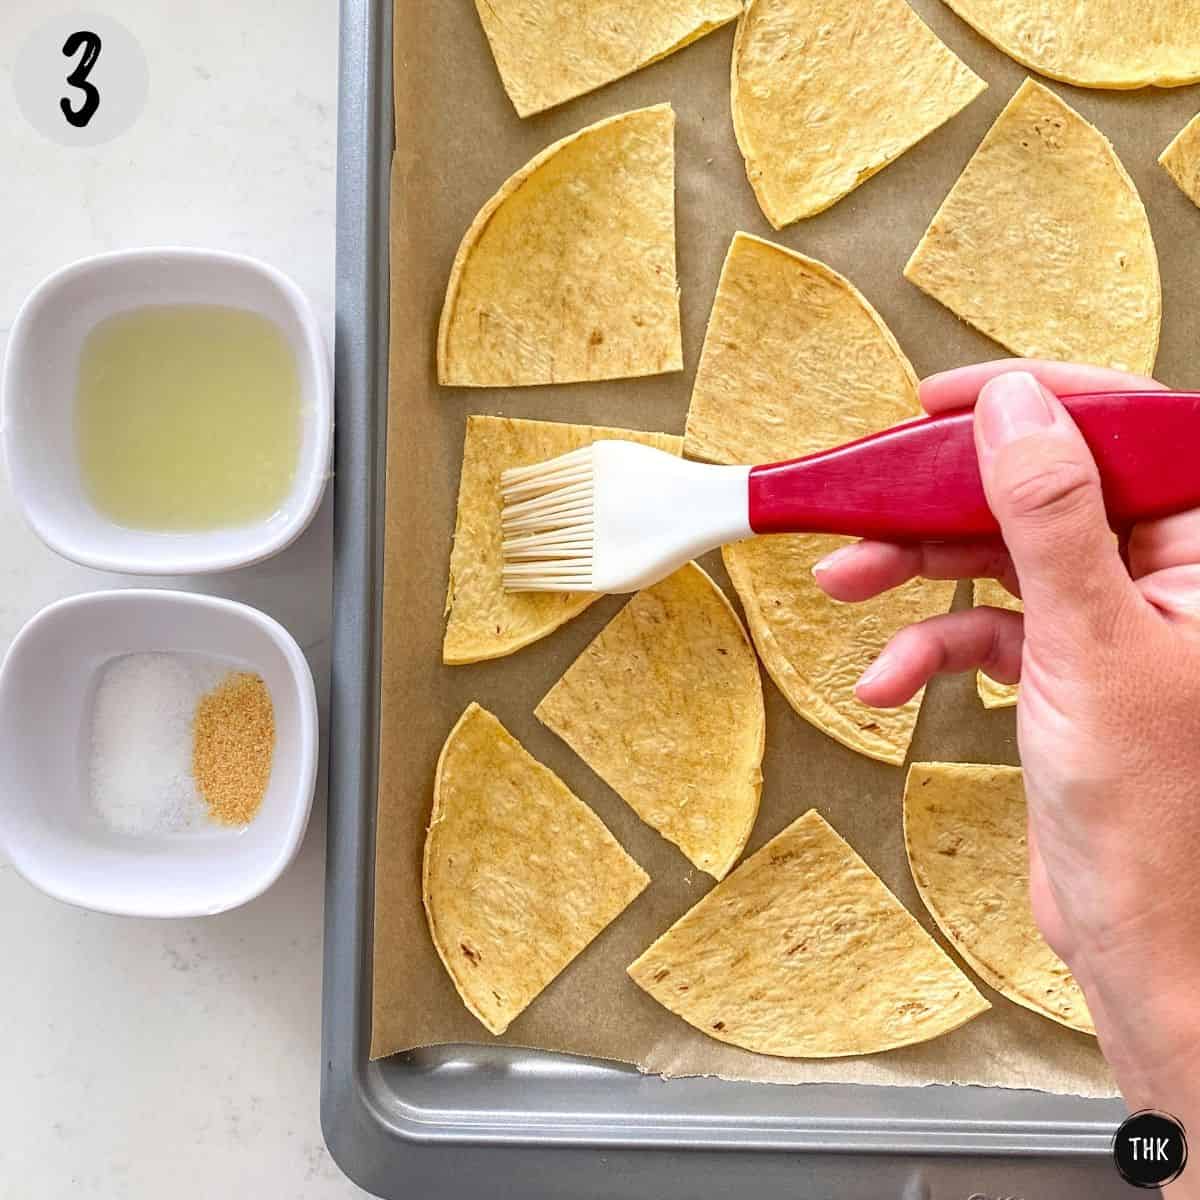 Silicone brush brushing liquid onto quartered tortilla pieces.